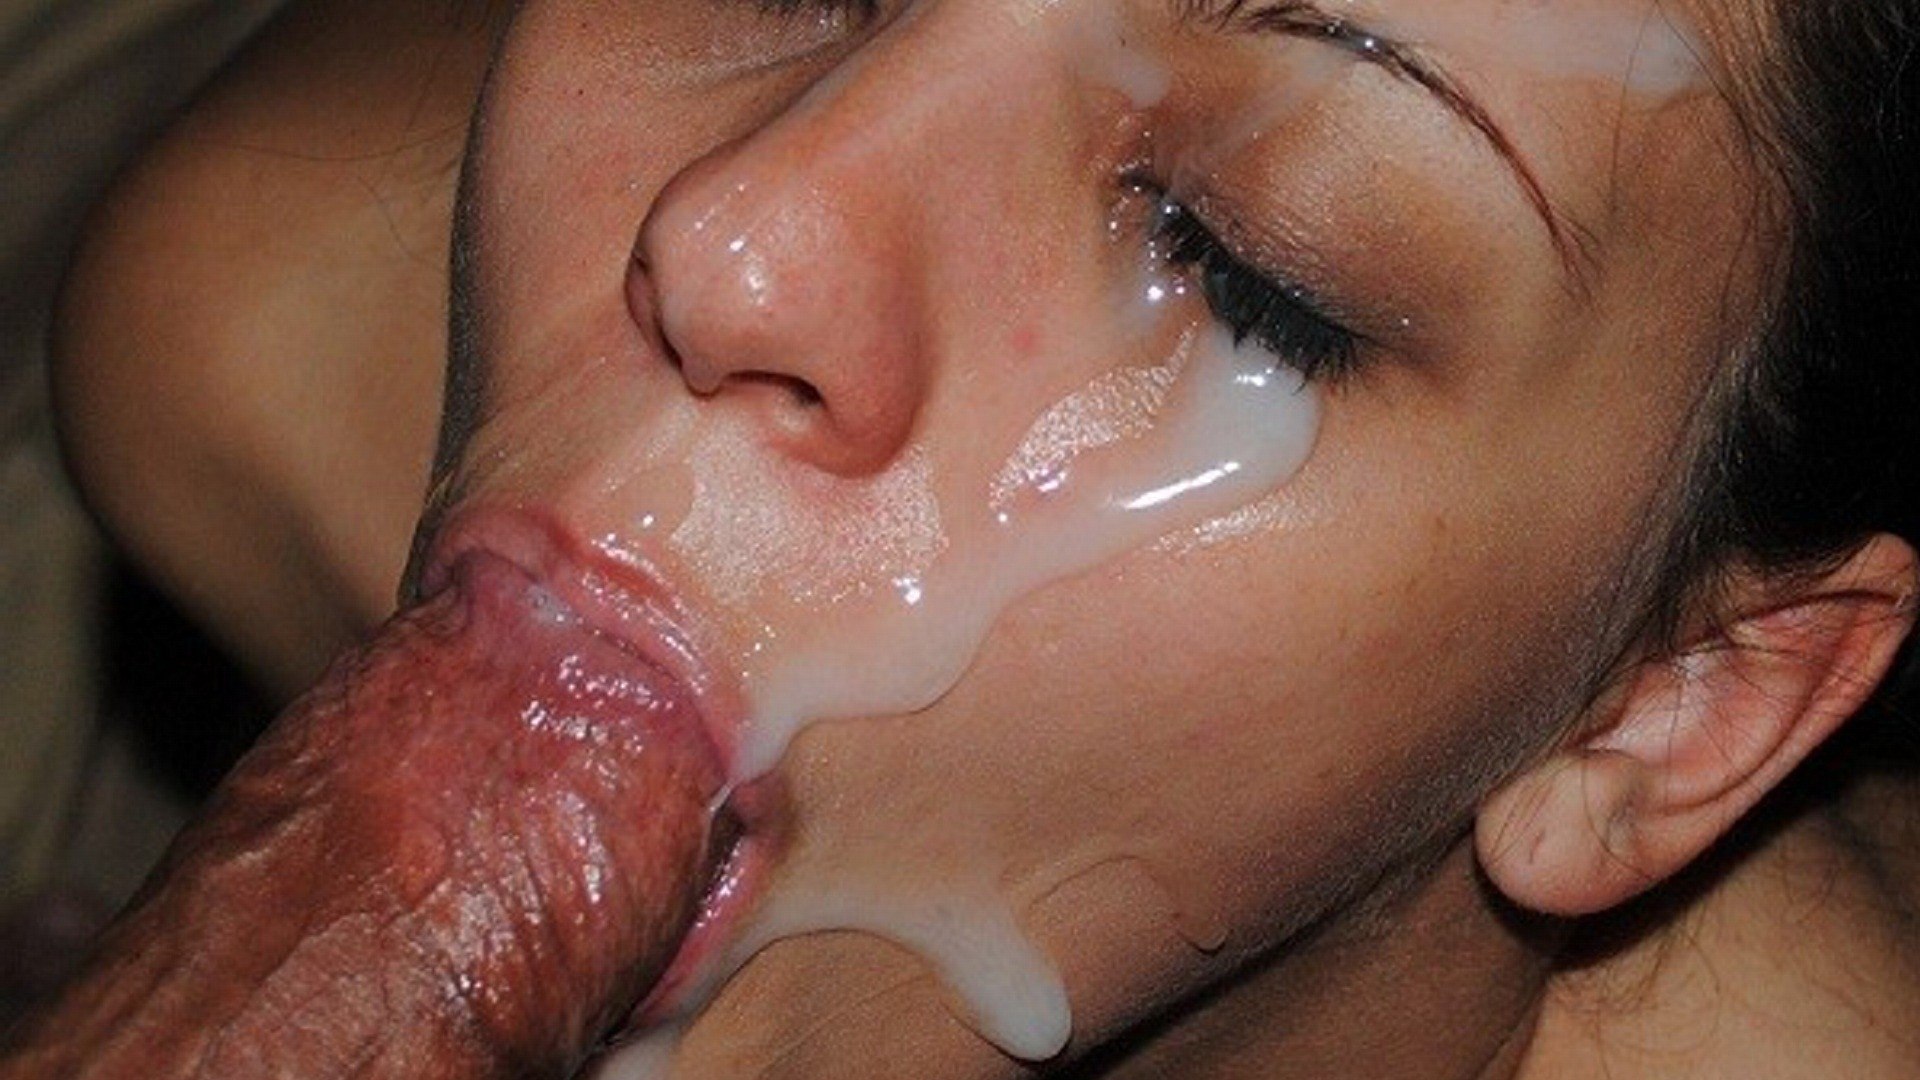 Amber creamy deepthroat free porn photos